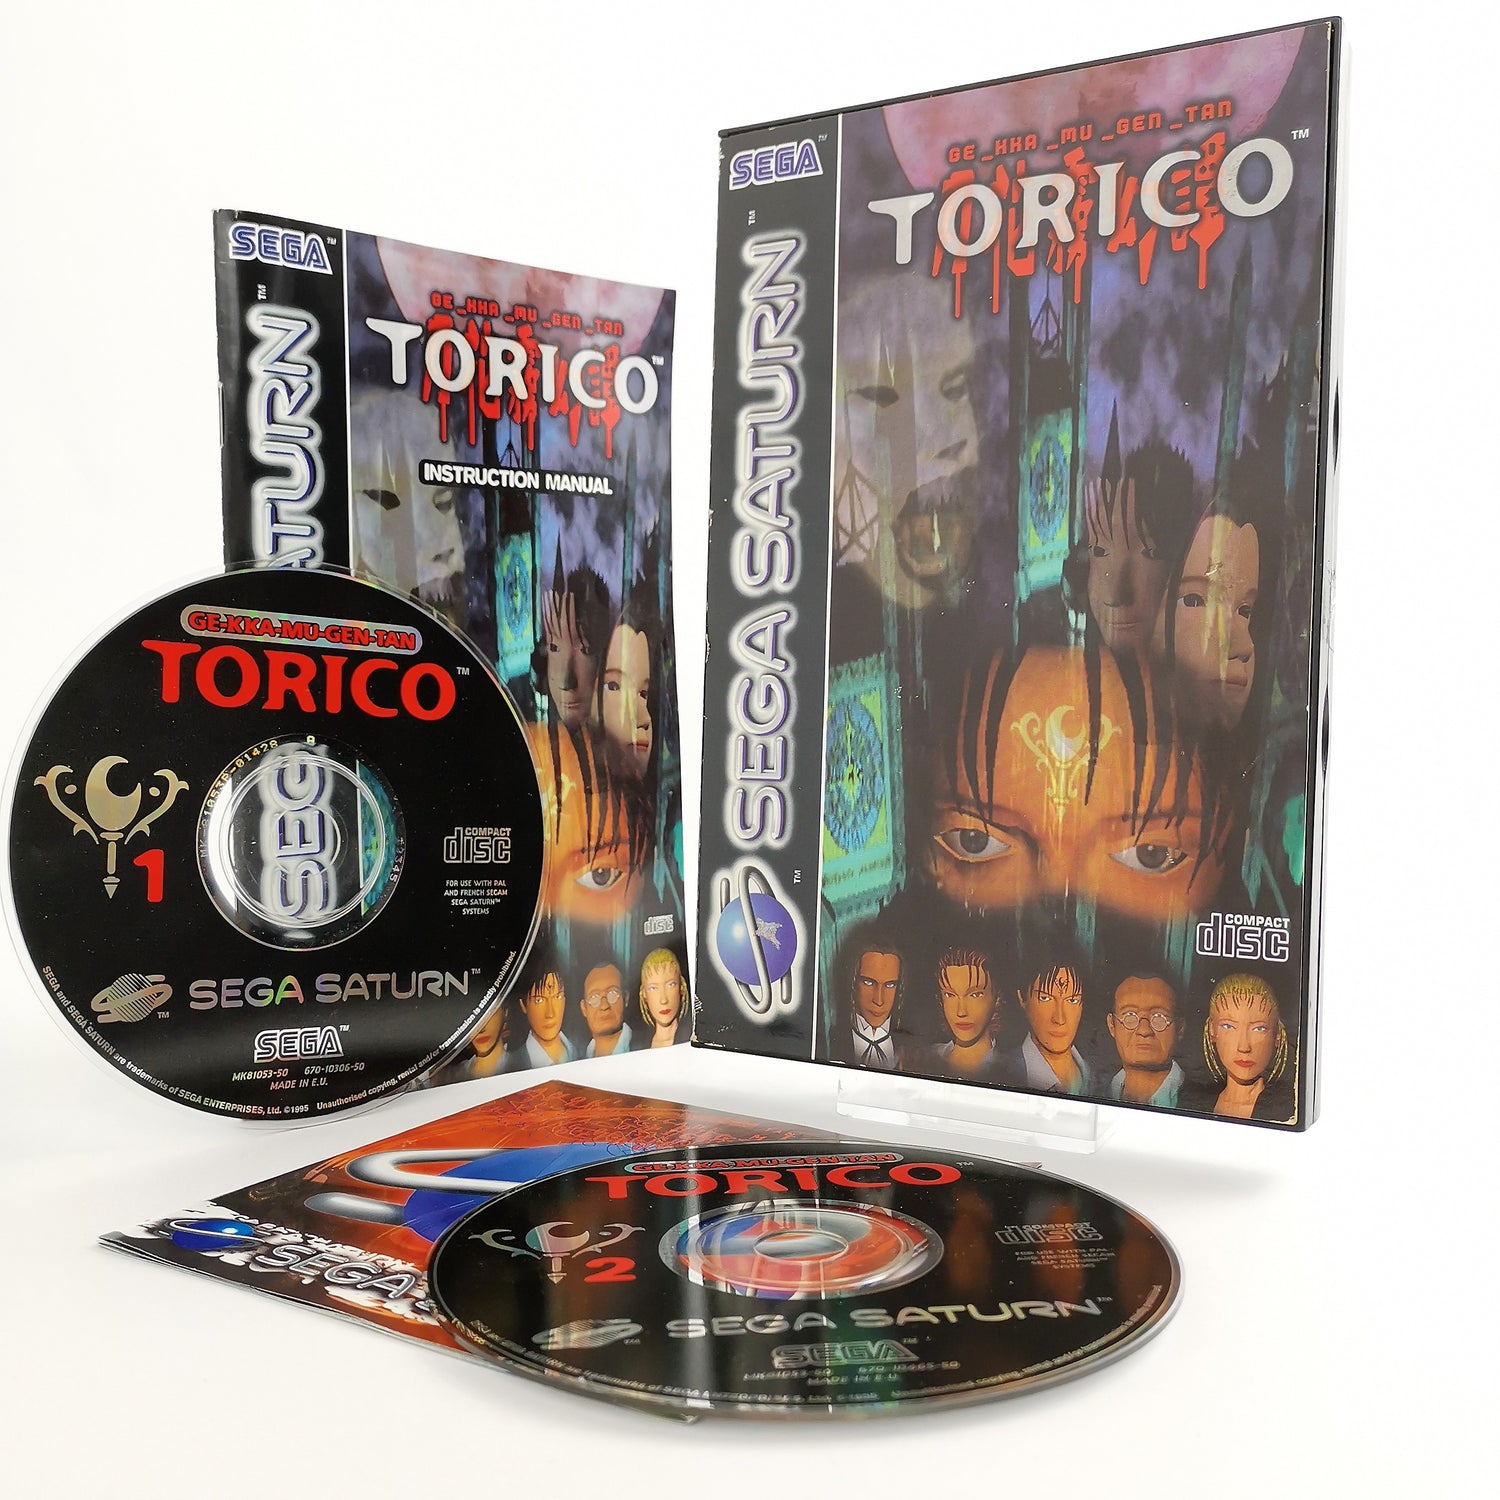 Sega Saturn Game: Torico - Original Packaging & Instructions | PAL version